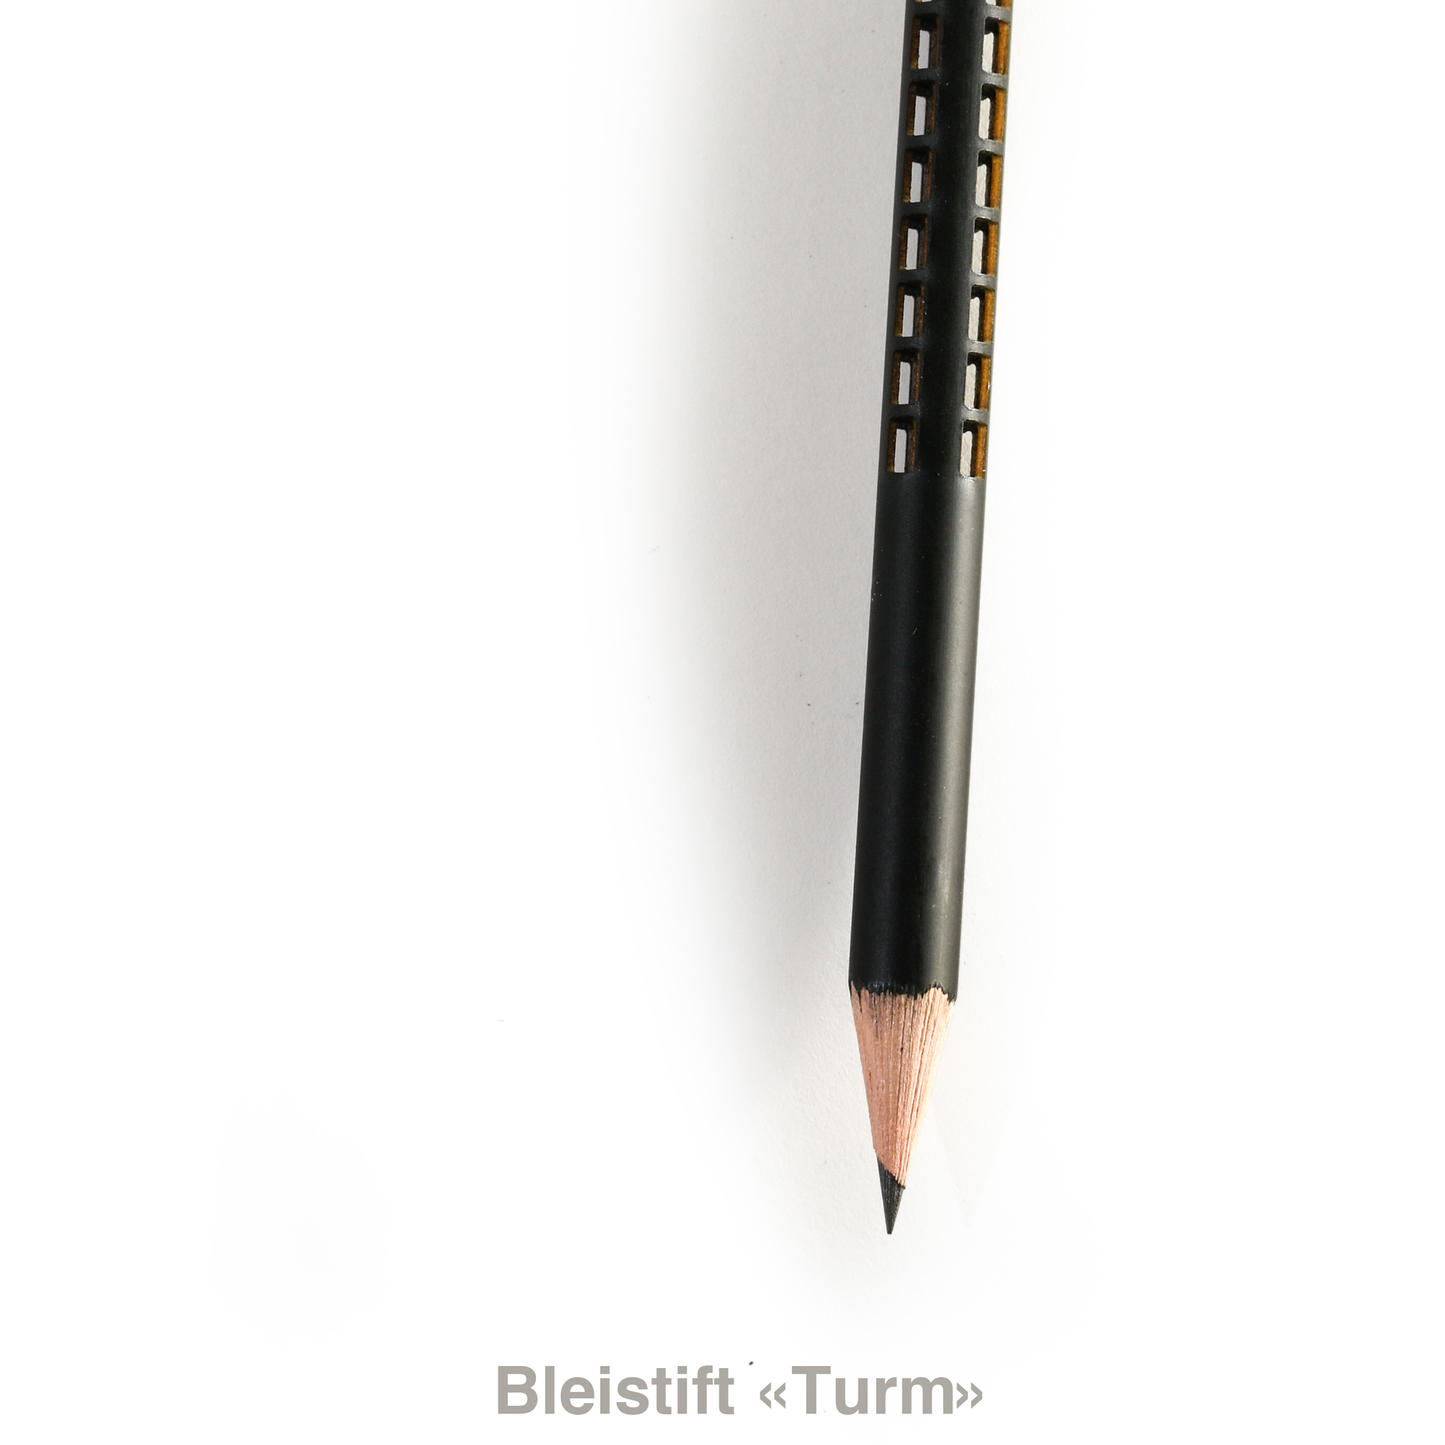 tät-tat - Bleistifte / Pencils - Collection box with 6 pencils